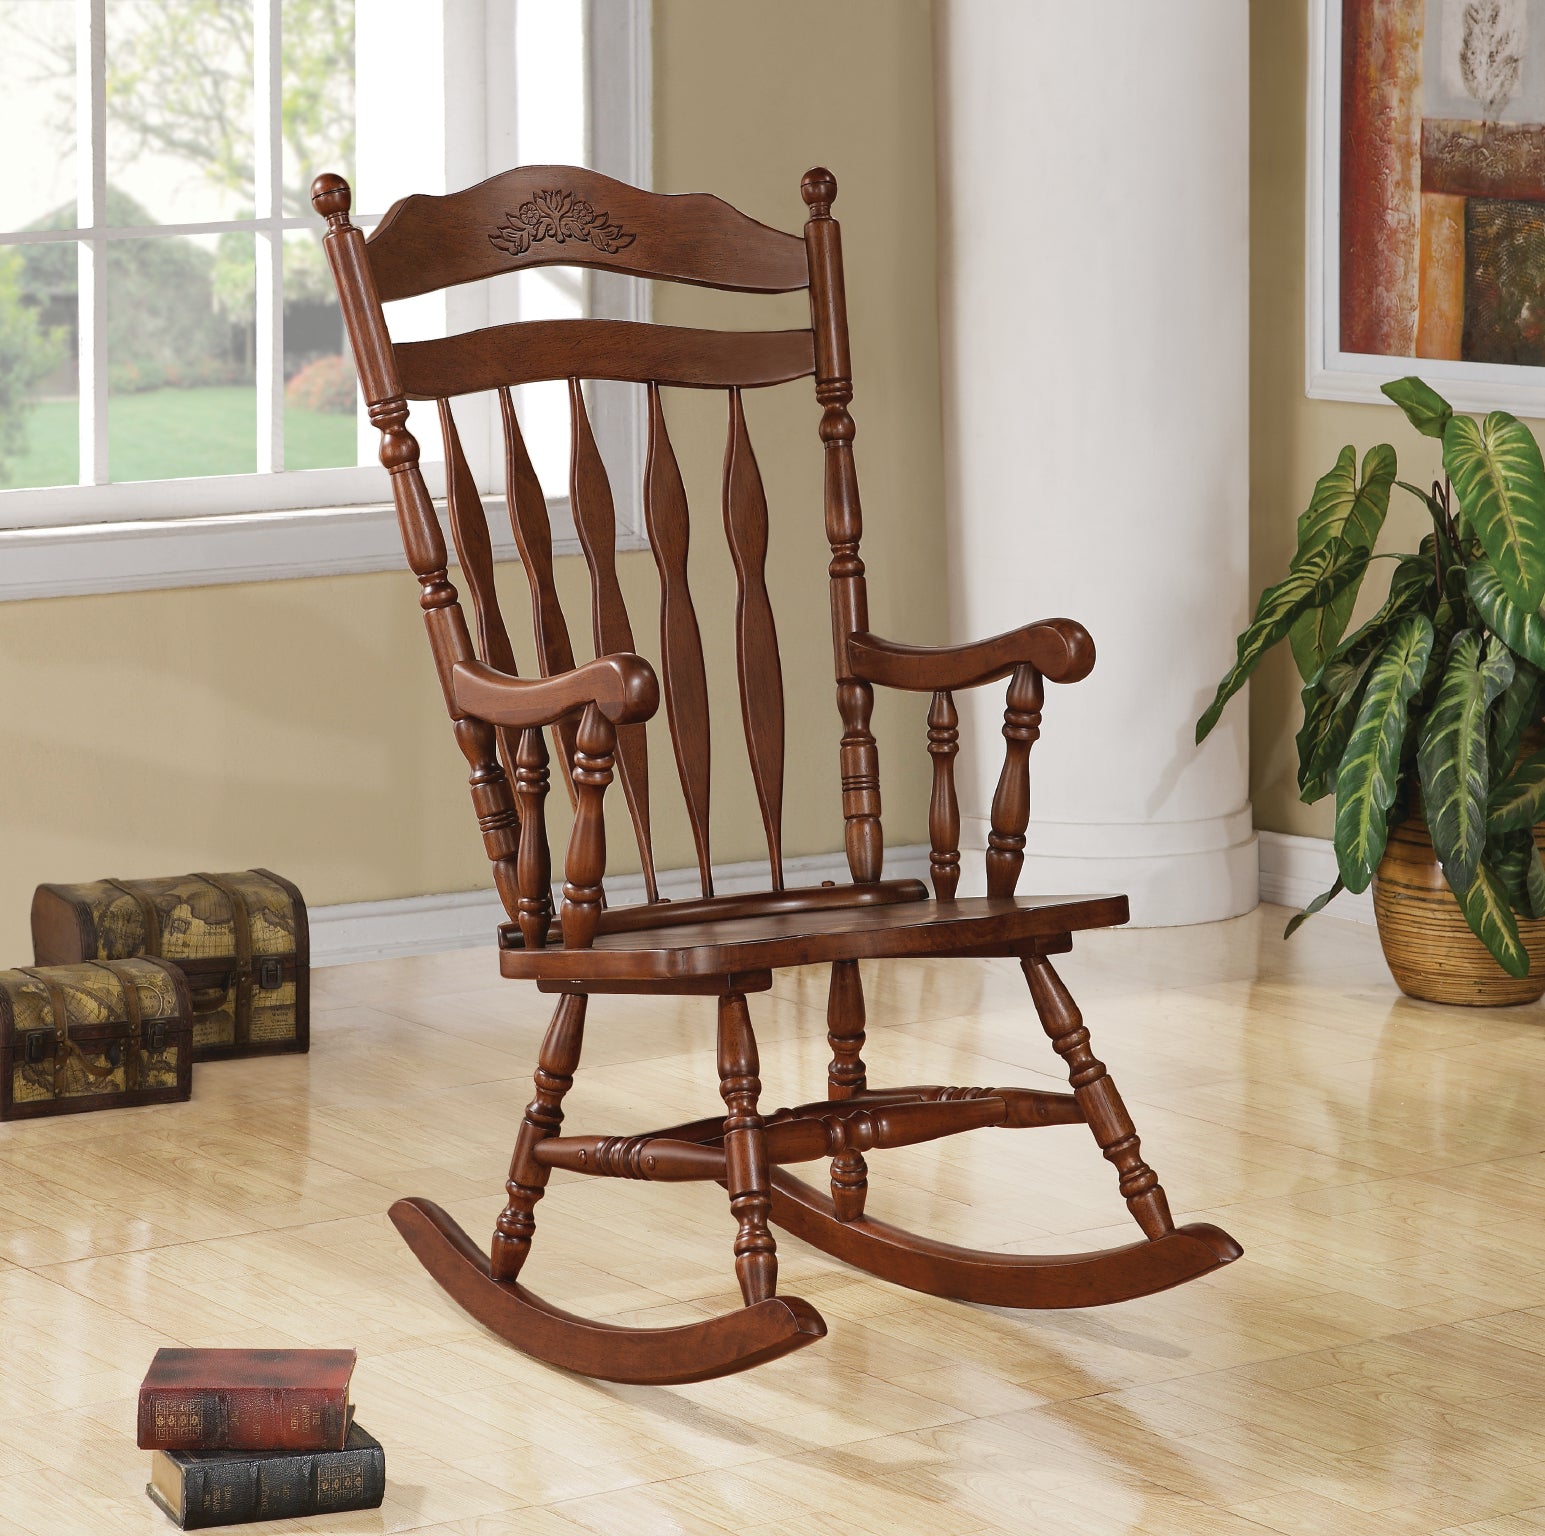 RCH114 - Rocking Chair